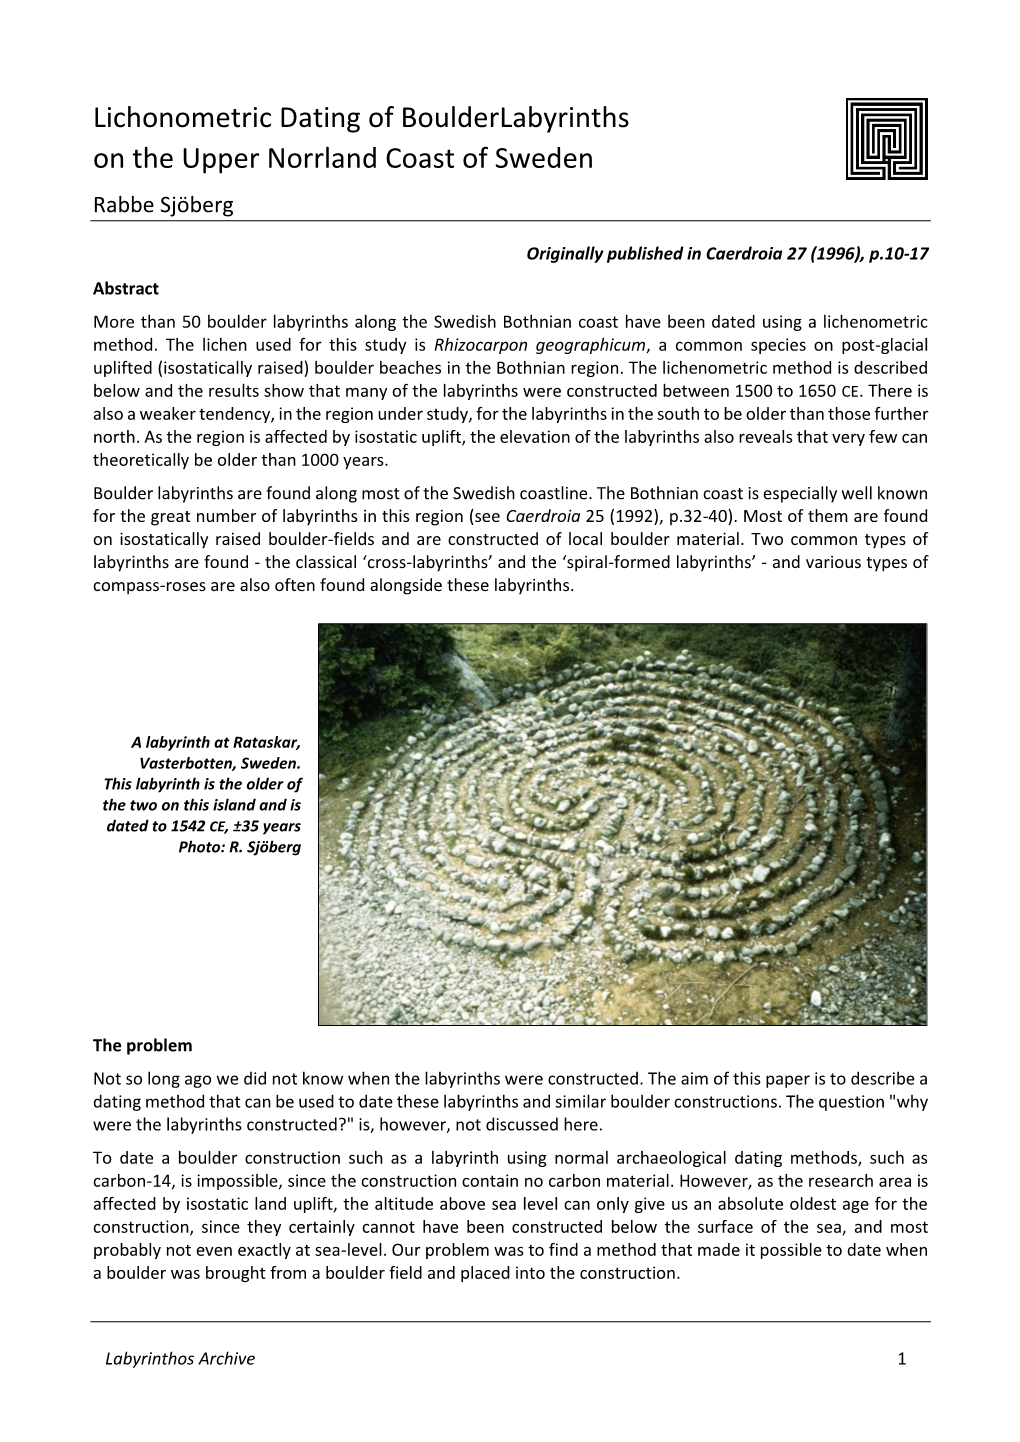 Lichonometric Dating of Boulderlabyrinths on the Upper Norrland Coast of Sweden Rabbe Sjöberg